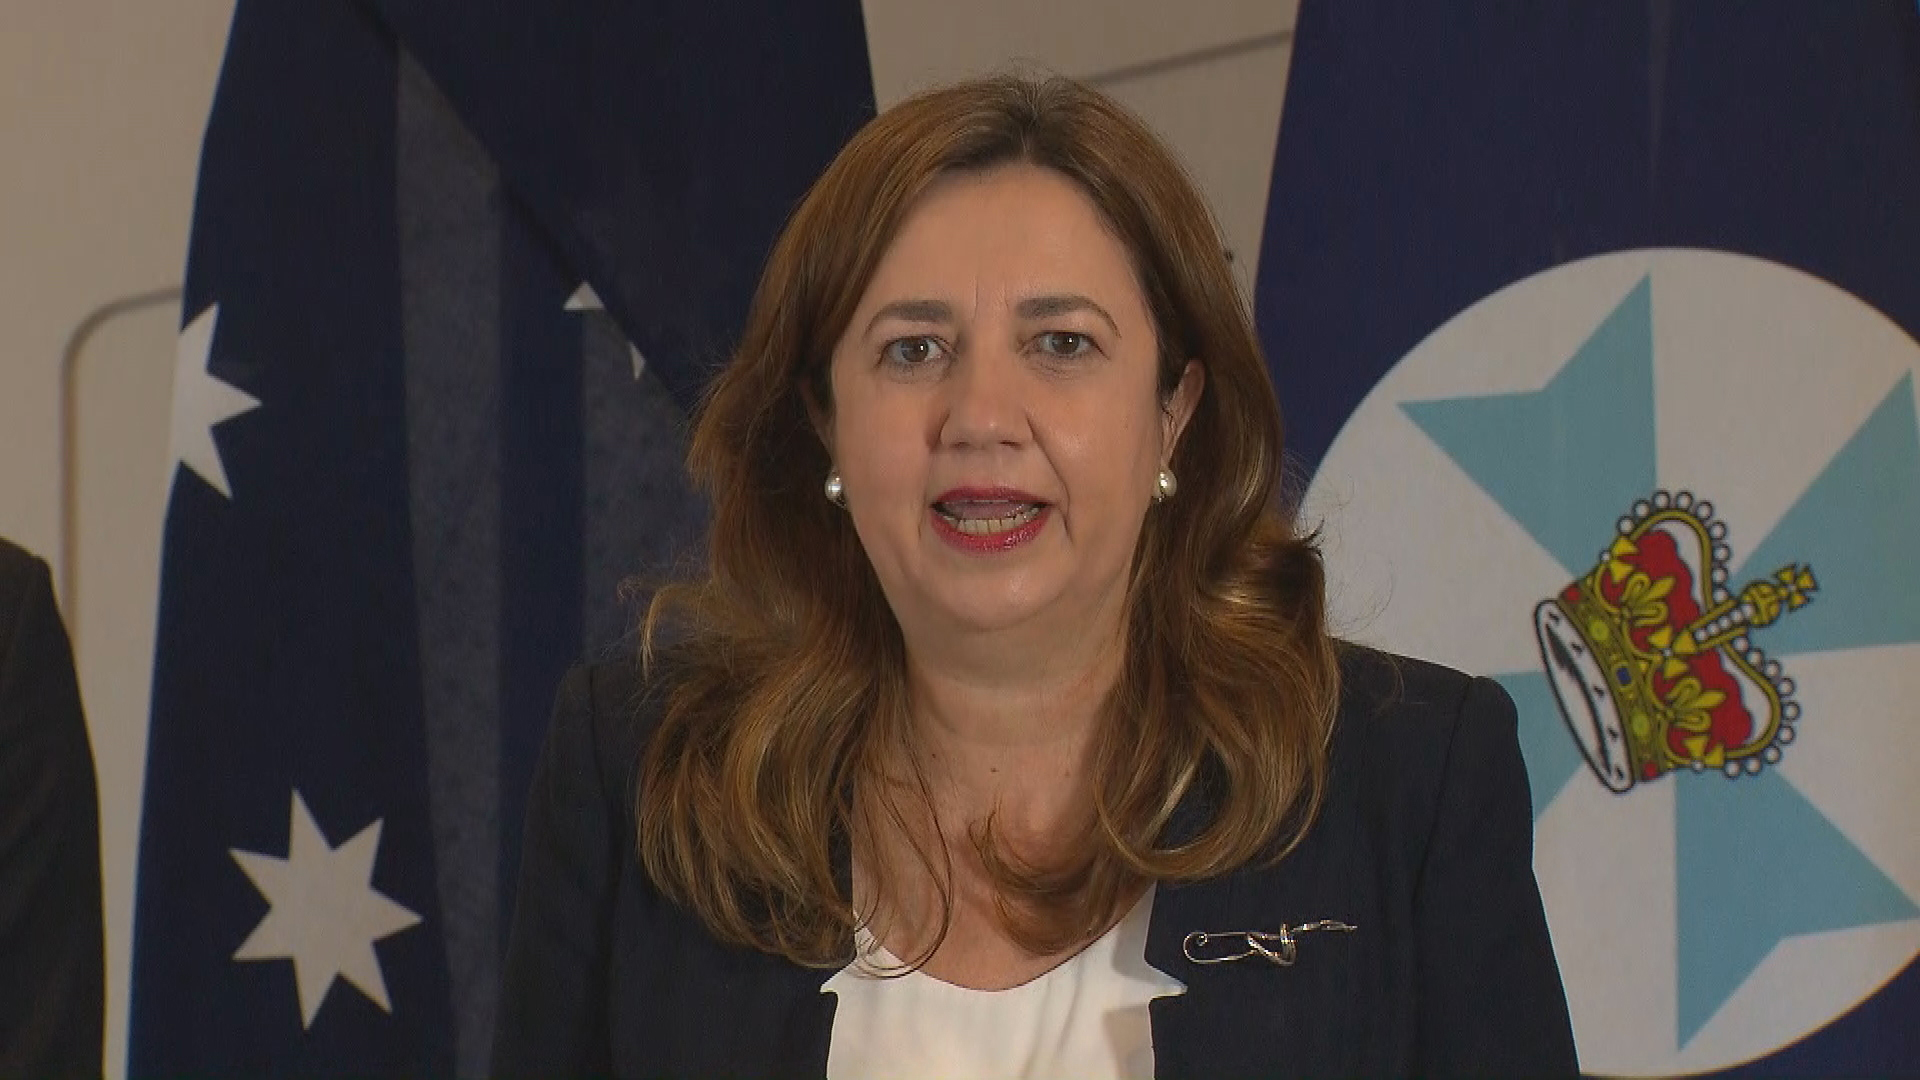 Queensland premier Annastacia Palaszczuk